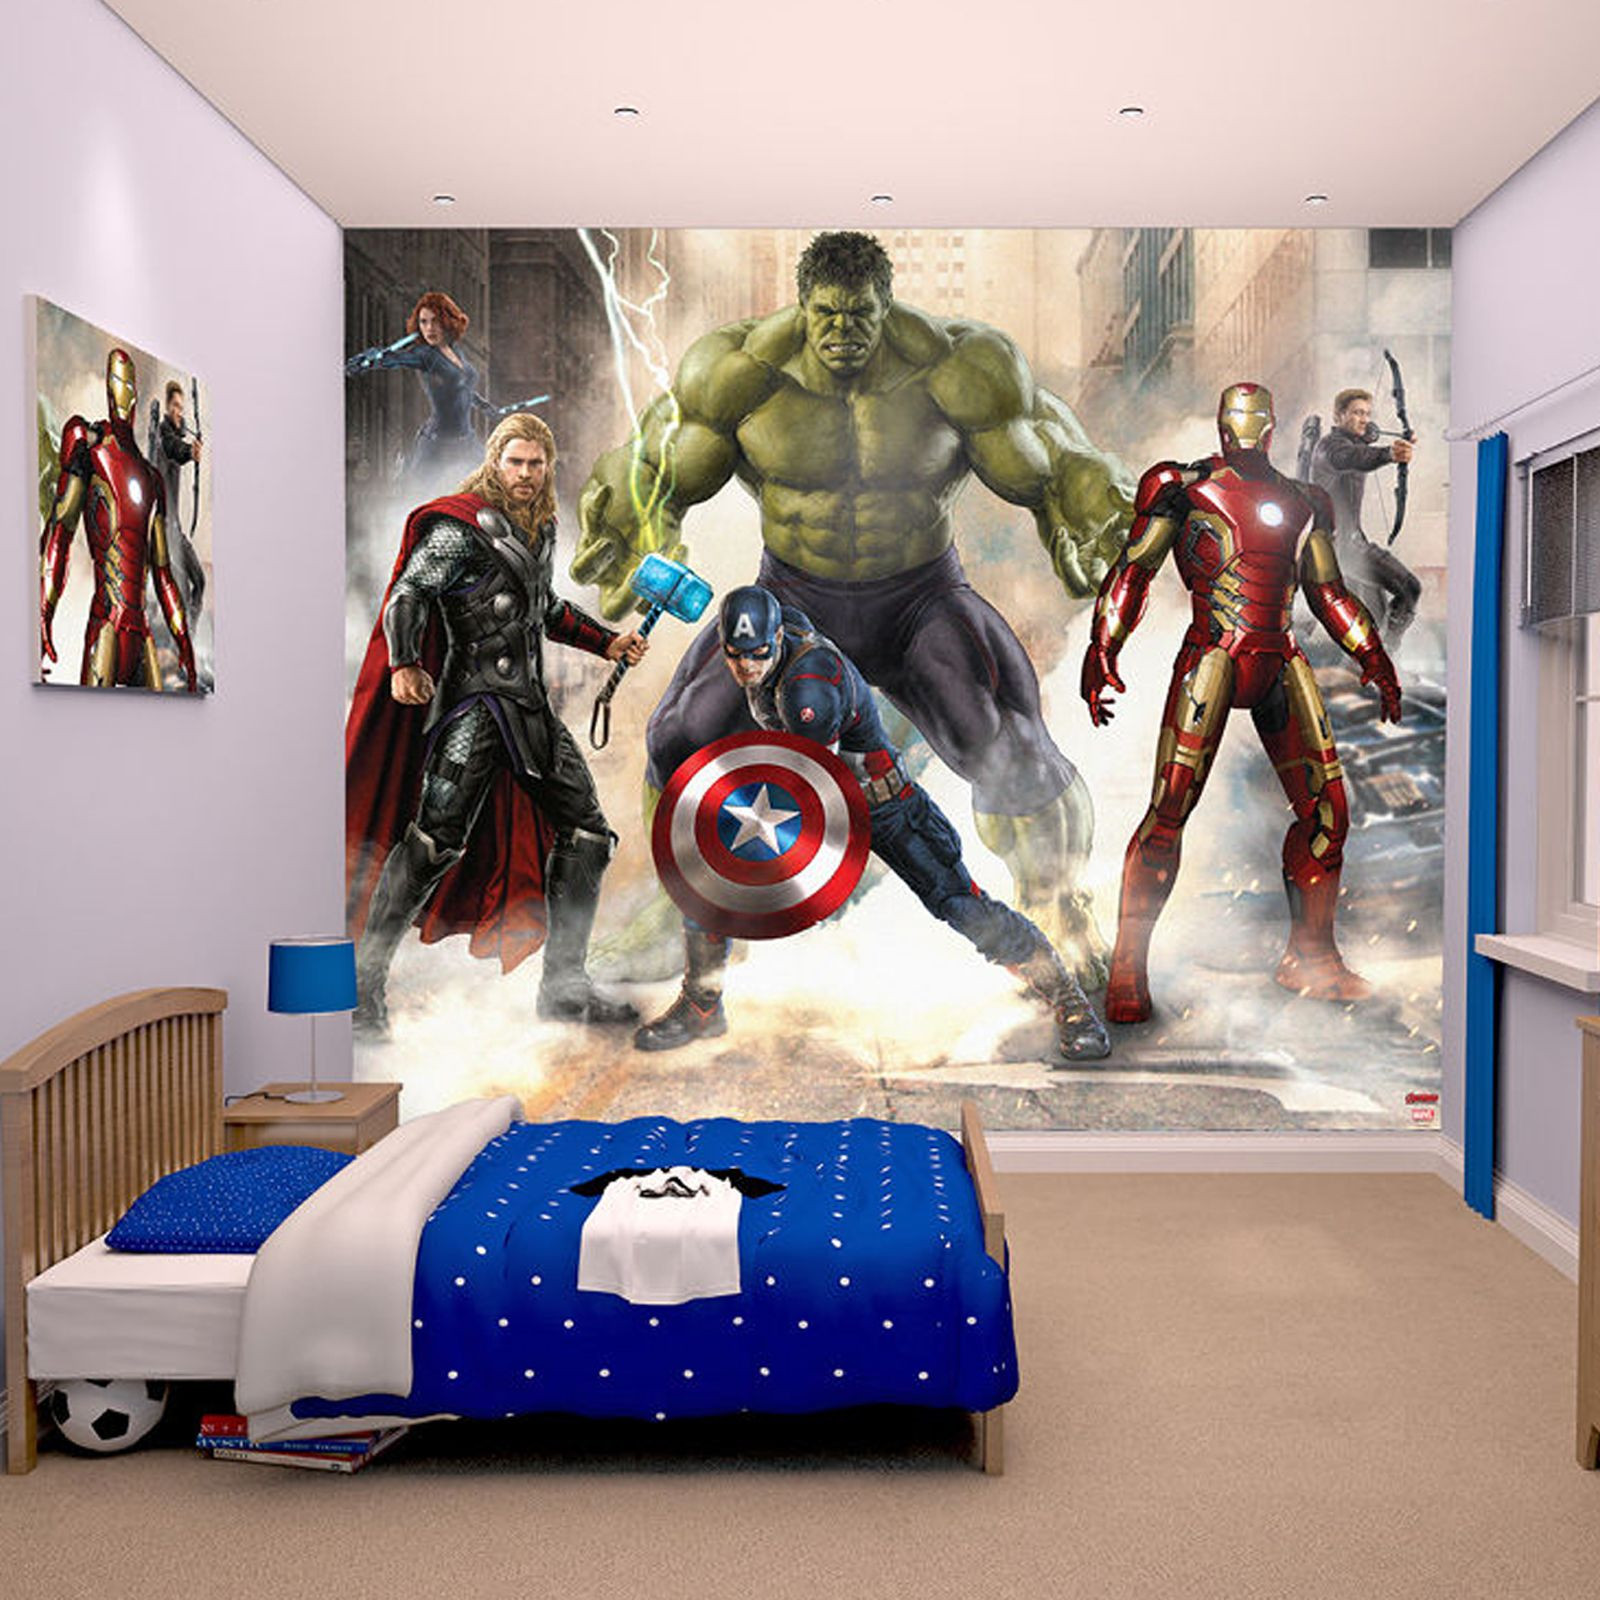 Avengers Bedroom Decor
 MARVEL ICS AND AVENGERS WALLPAPER WALL MURALS DÉCOR BEDROOM